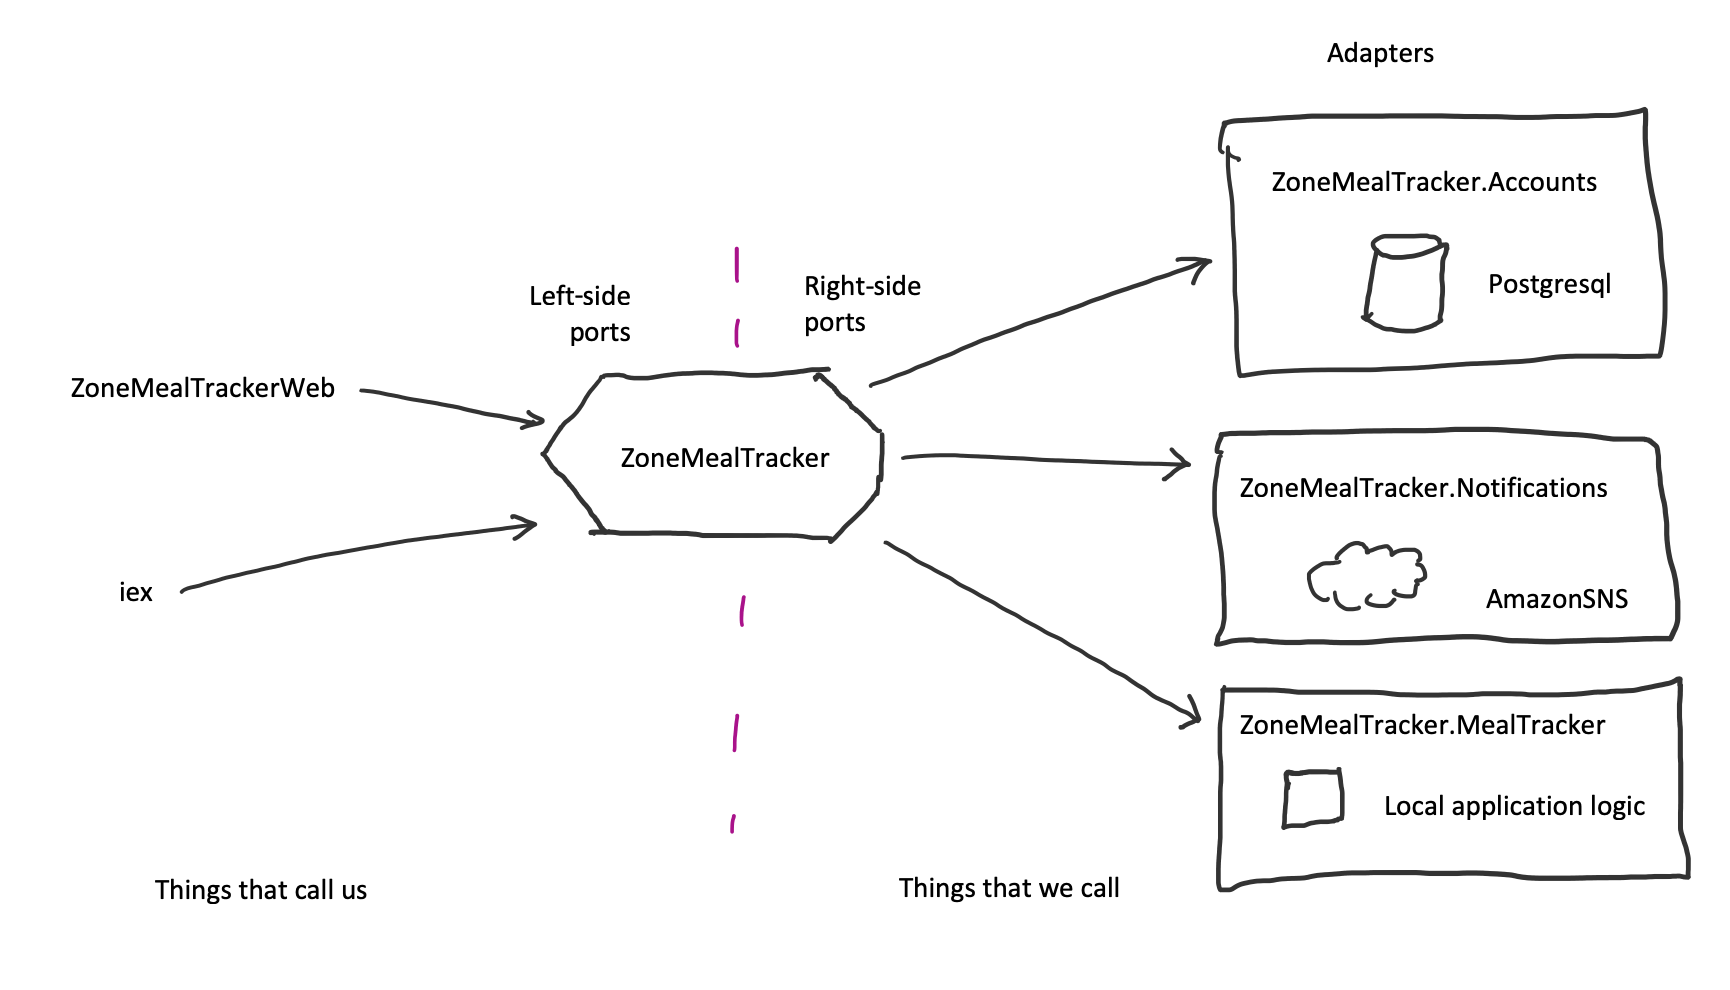 Hexagonal architecture diagram of ZoneMealTracker with original adapters